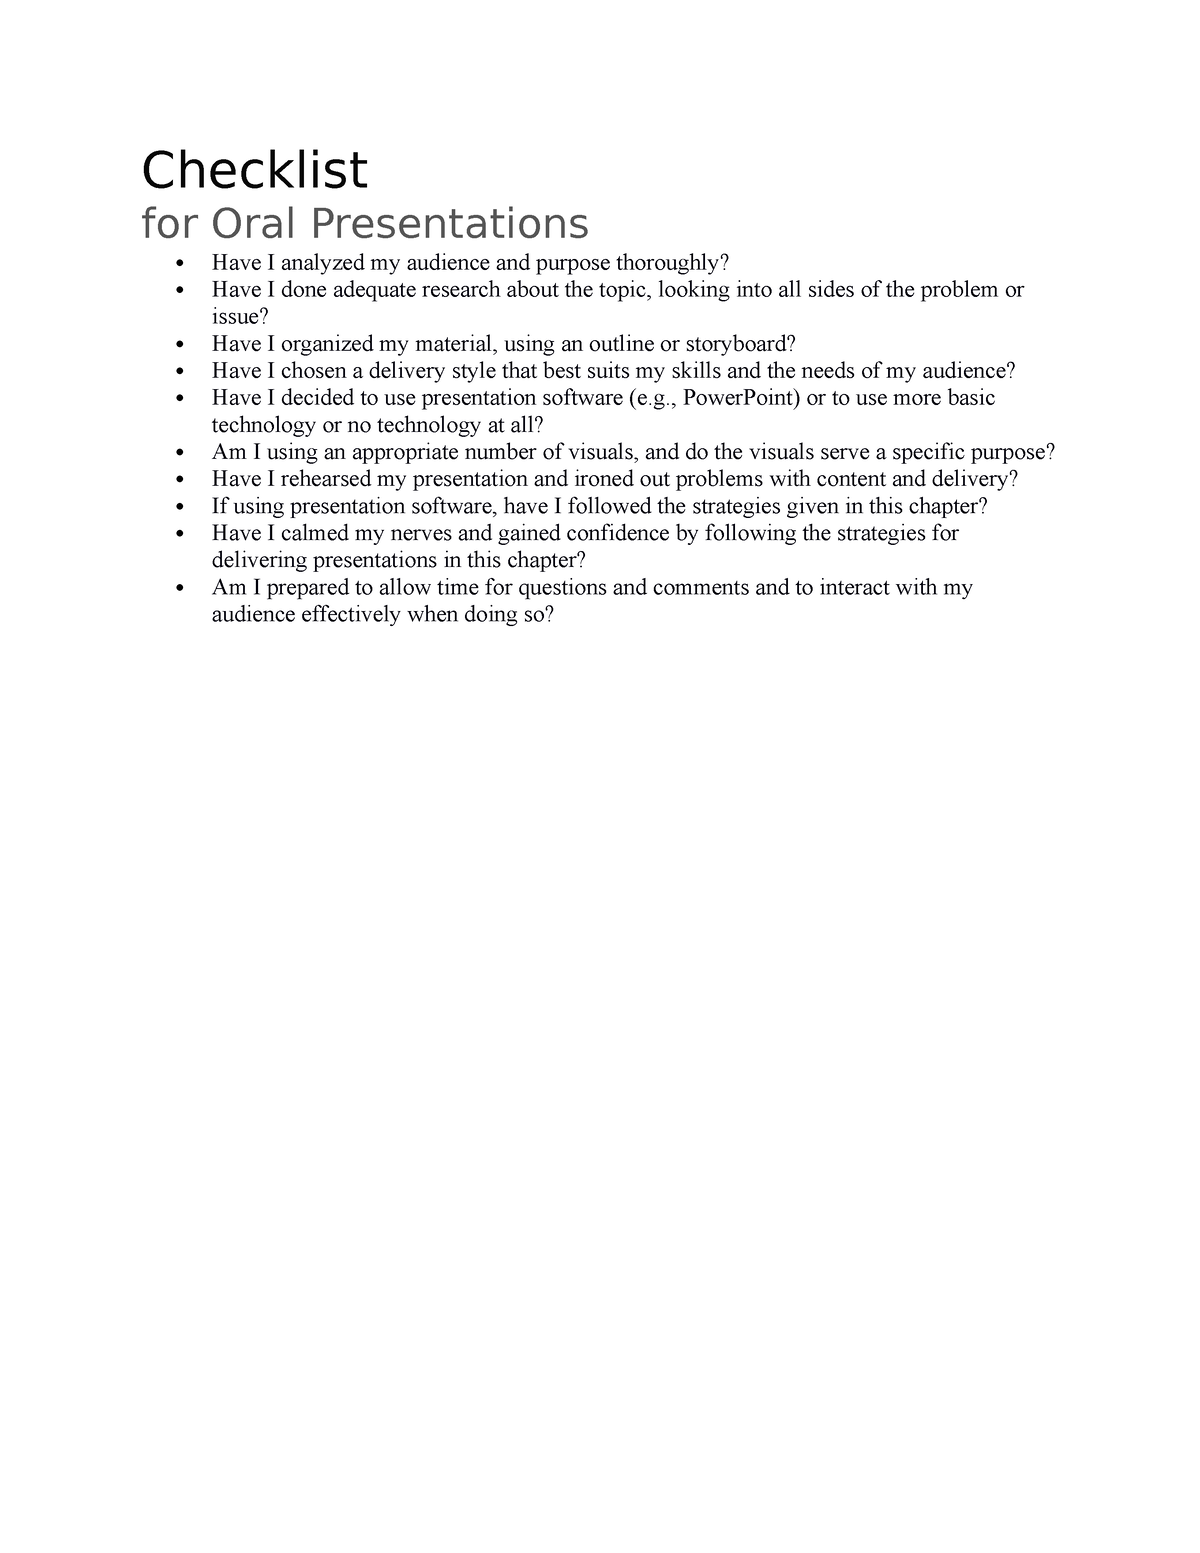 oral presentation checklist for students